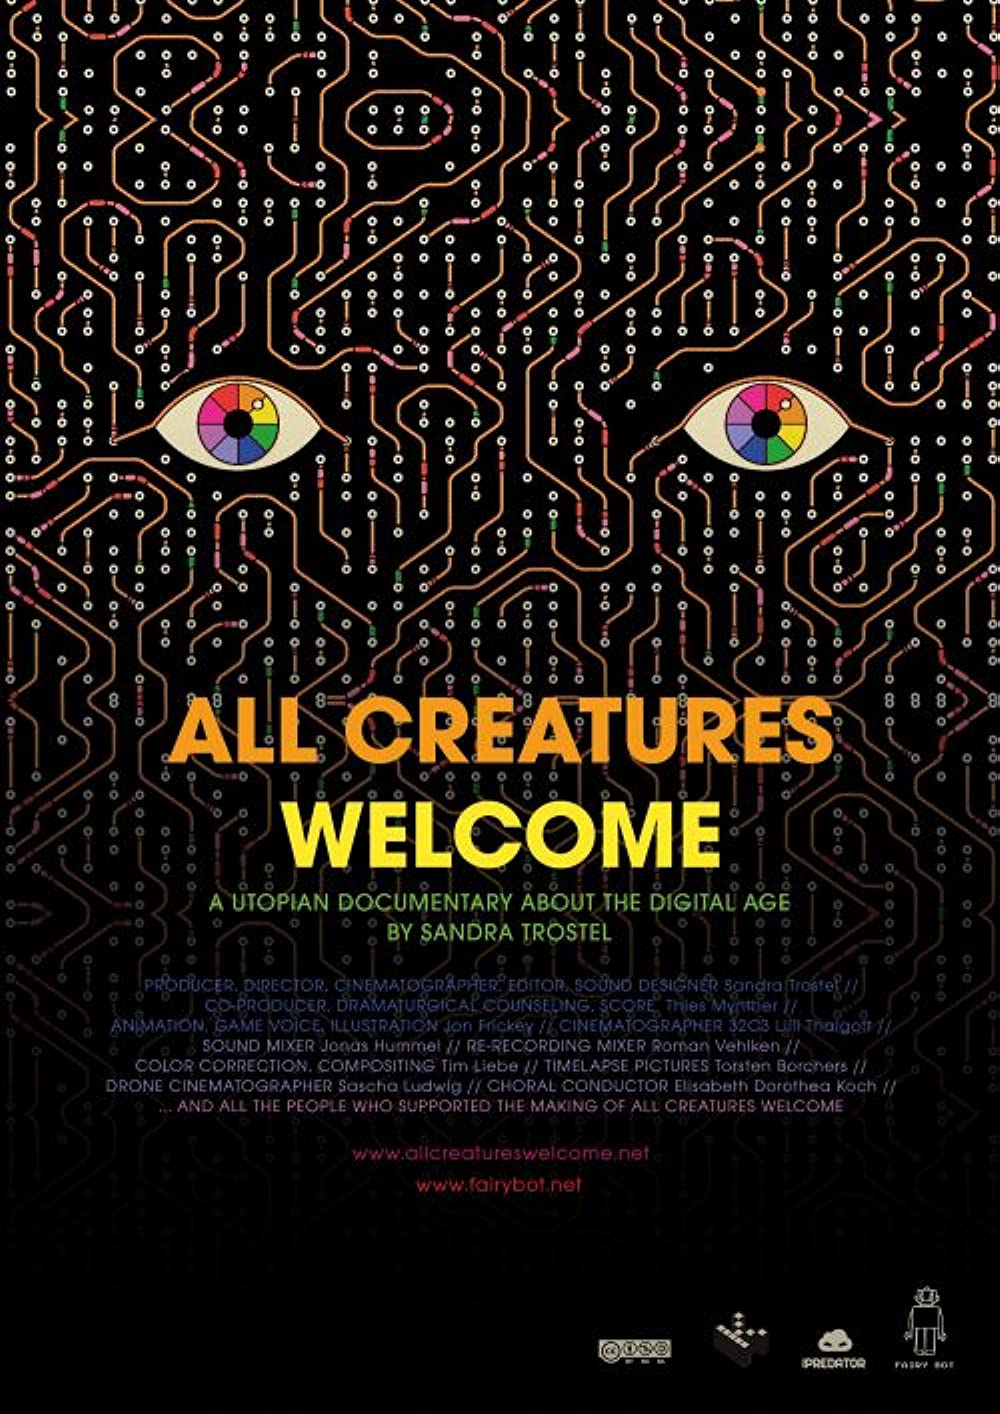 Filmbeschreibung zu All Creatures Welcome